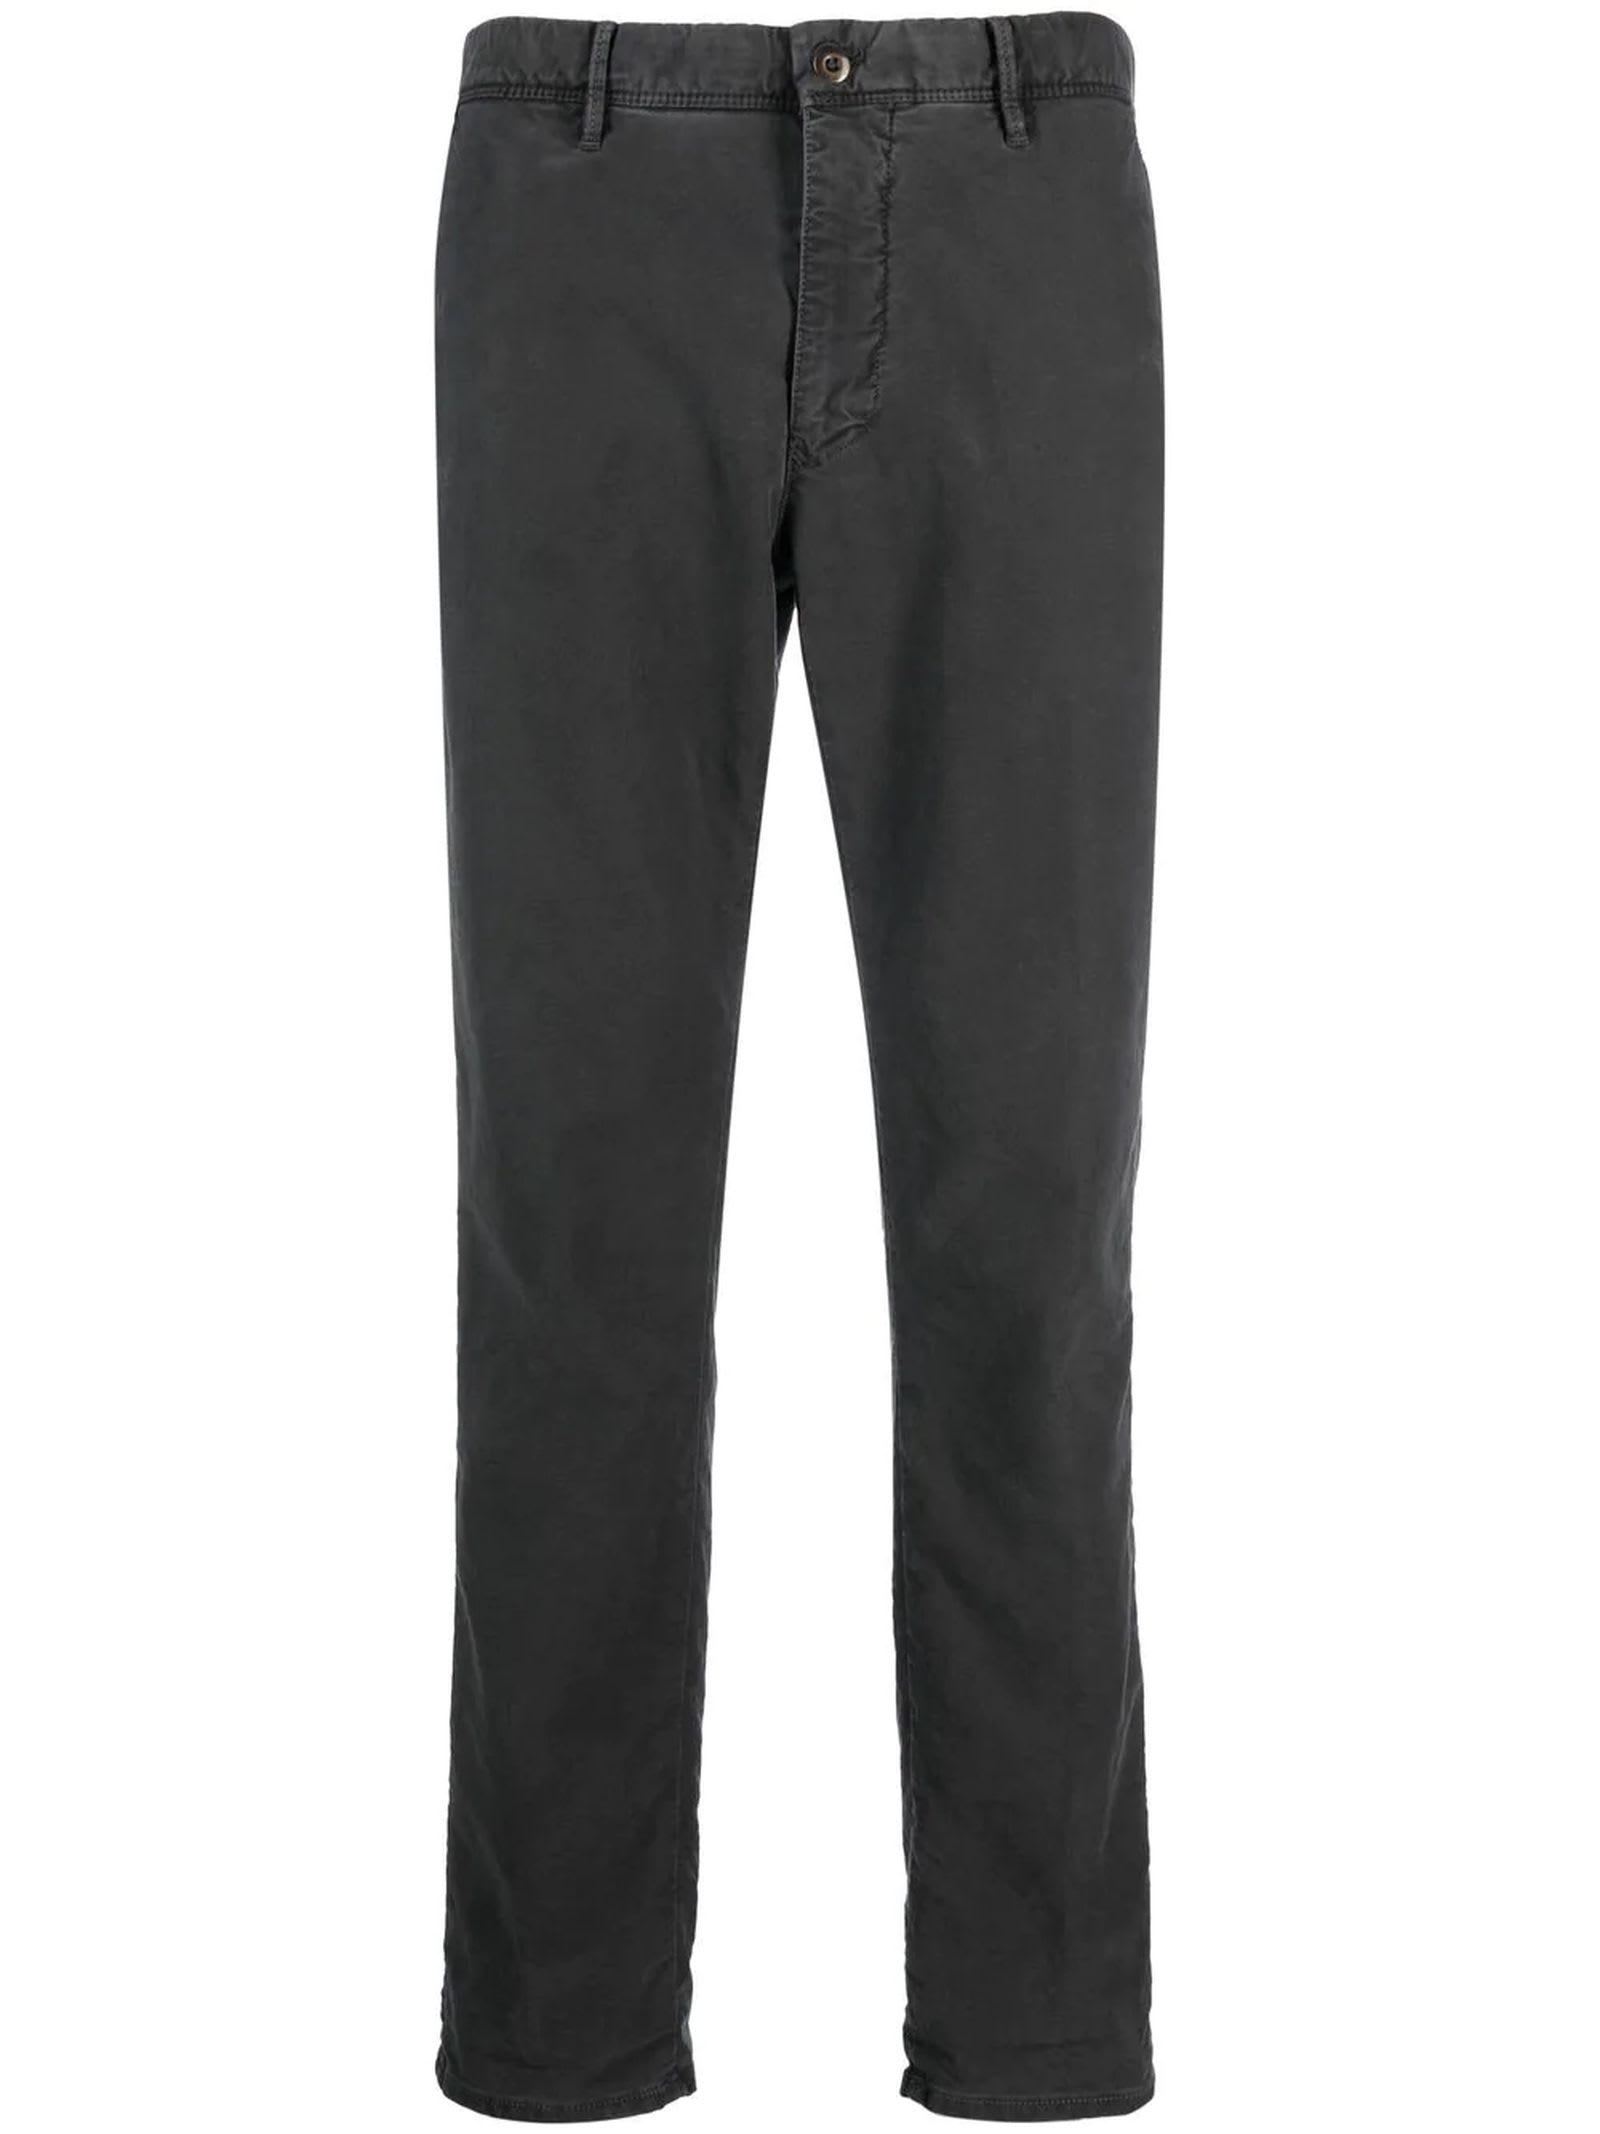 Incotex Dark Grey Cotton Trousers